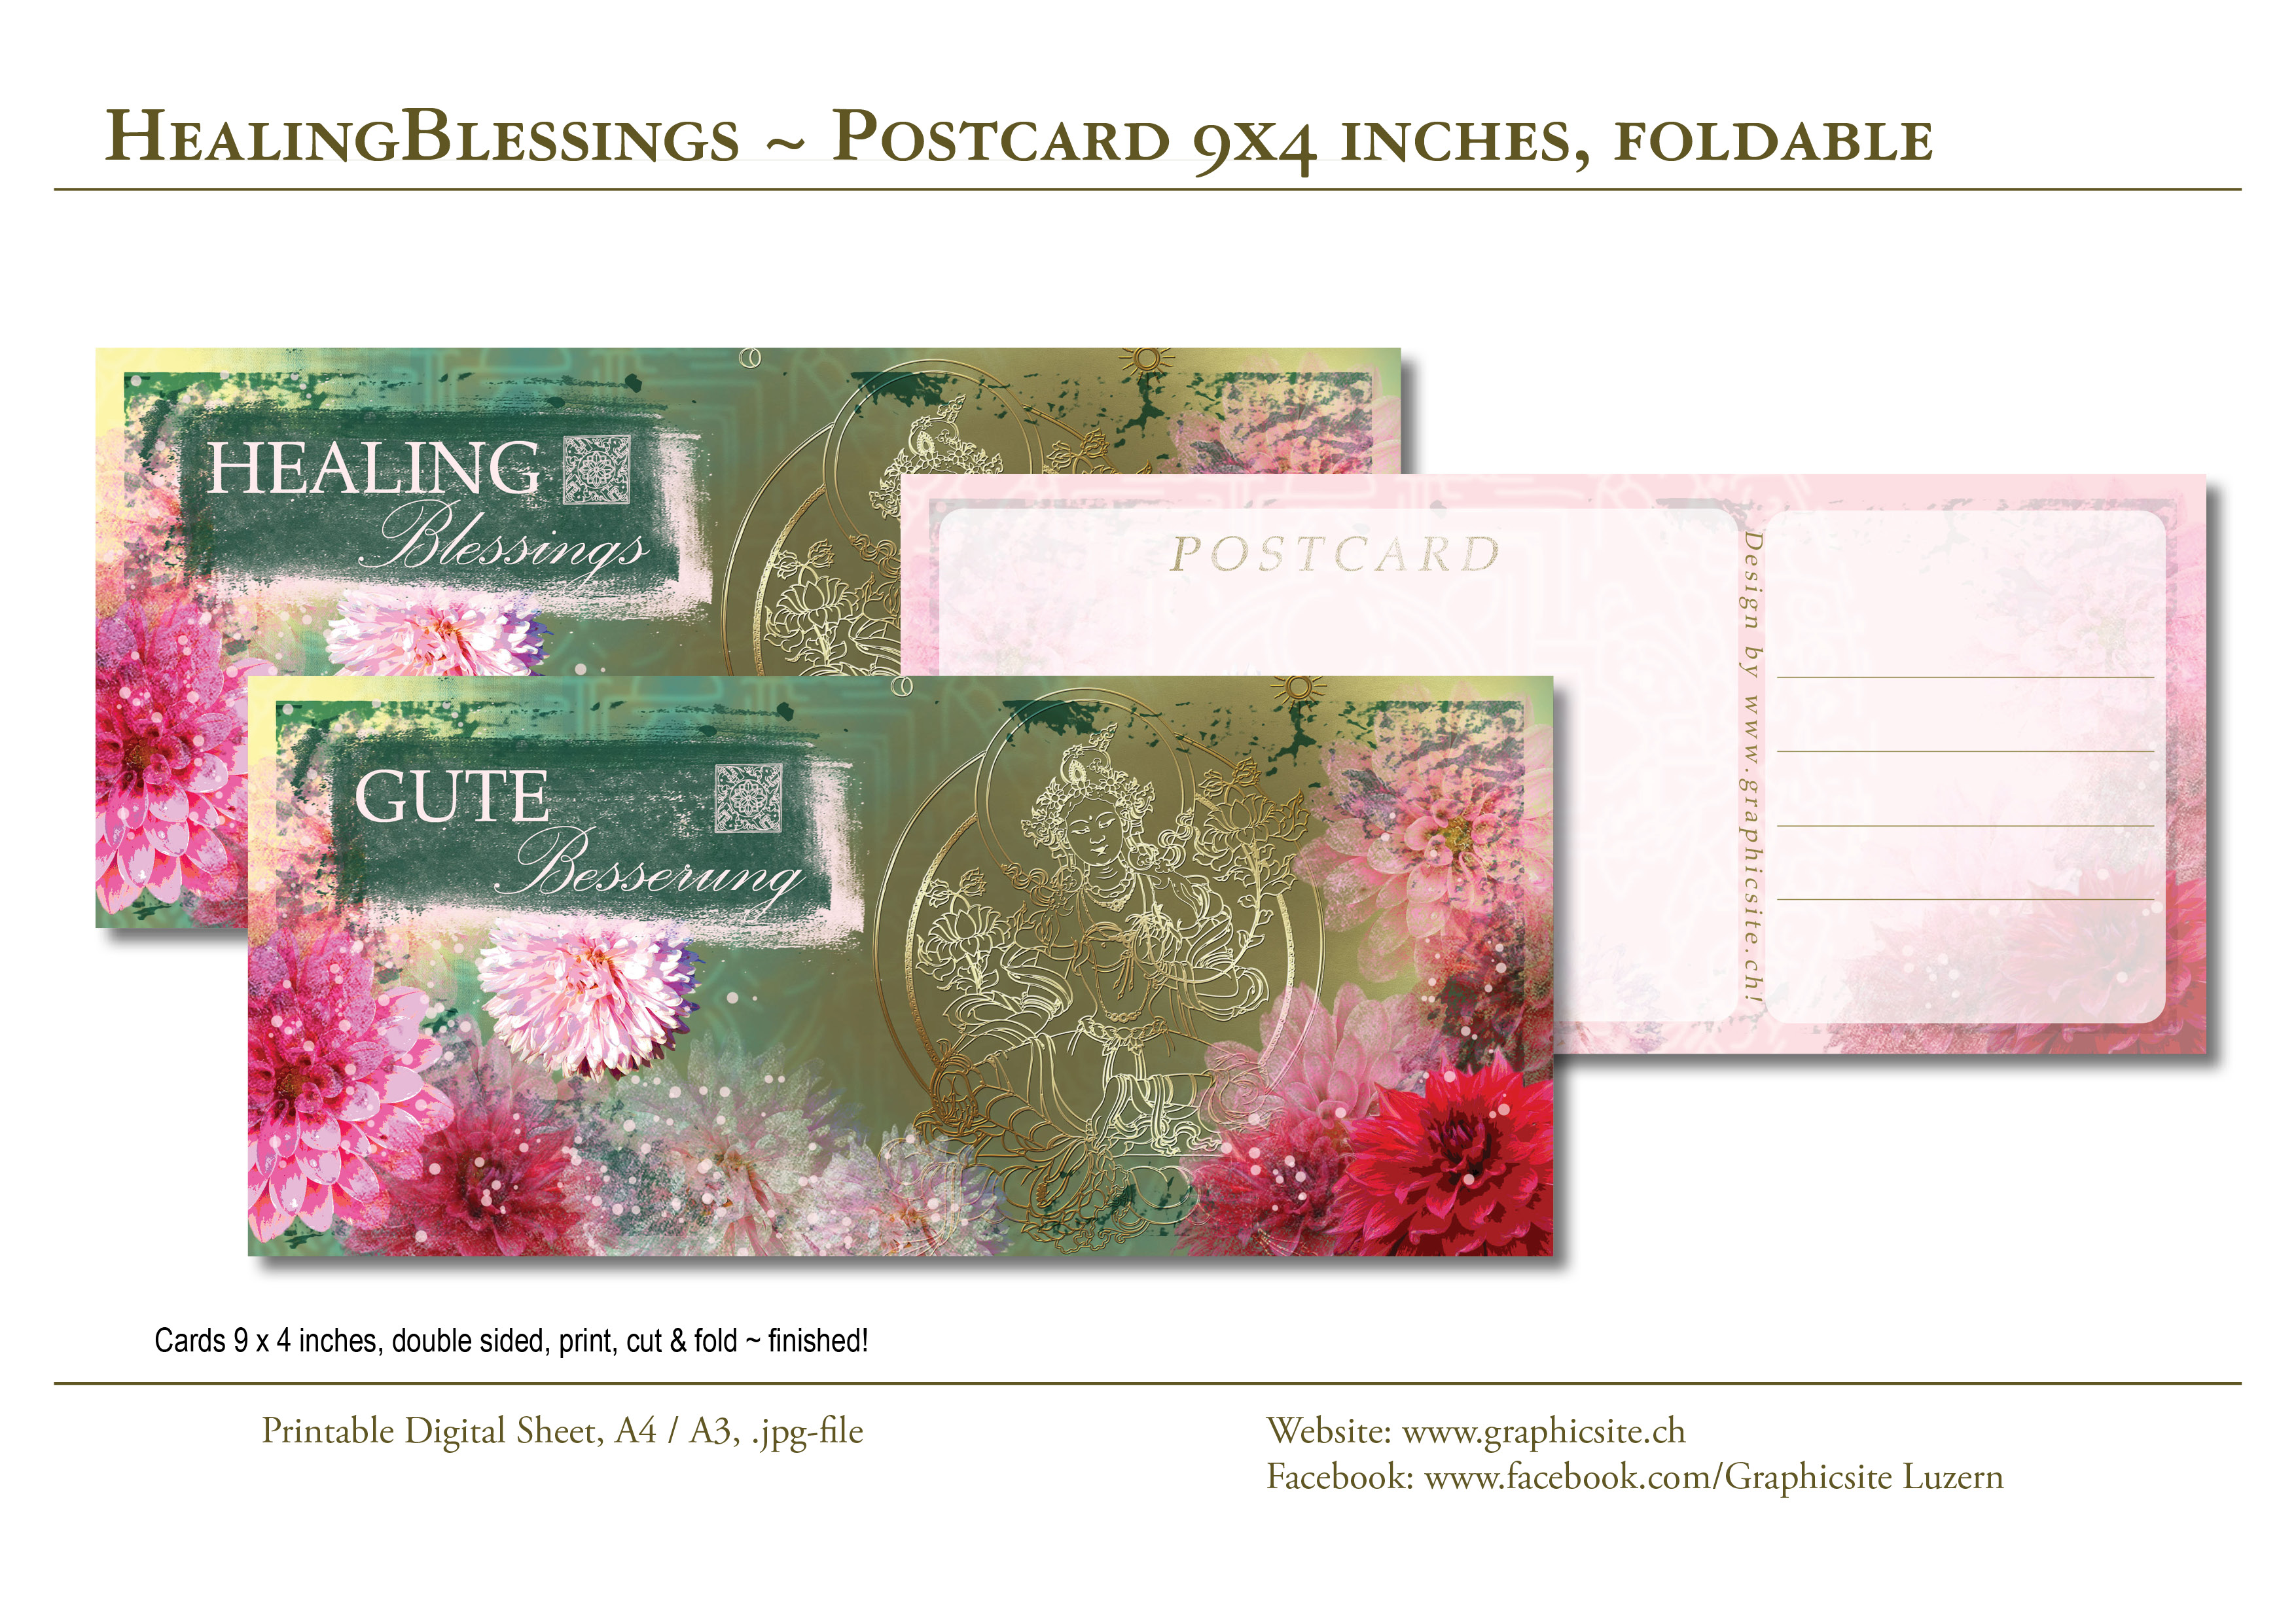 Printable Digital Sheets, Postcard, GreetingCard, GetWell, Healing Blessings, Graphic Design, Luzern, Scrapbooking, Cardmaking, Journal, 